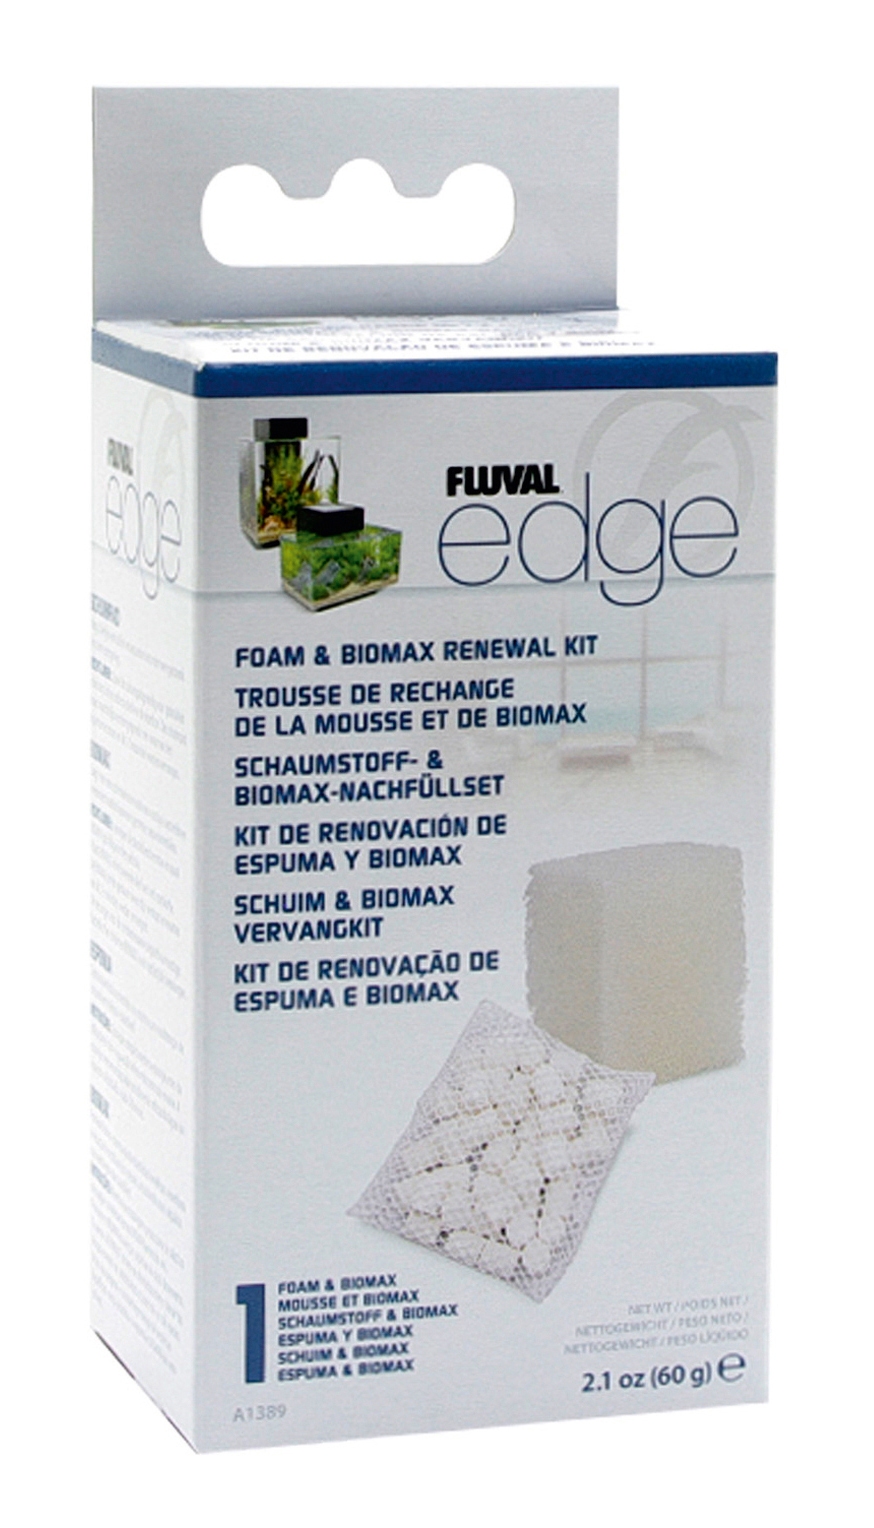 Fl edge foam and biomax renewal kit white - Product shot